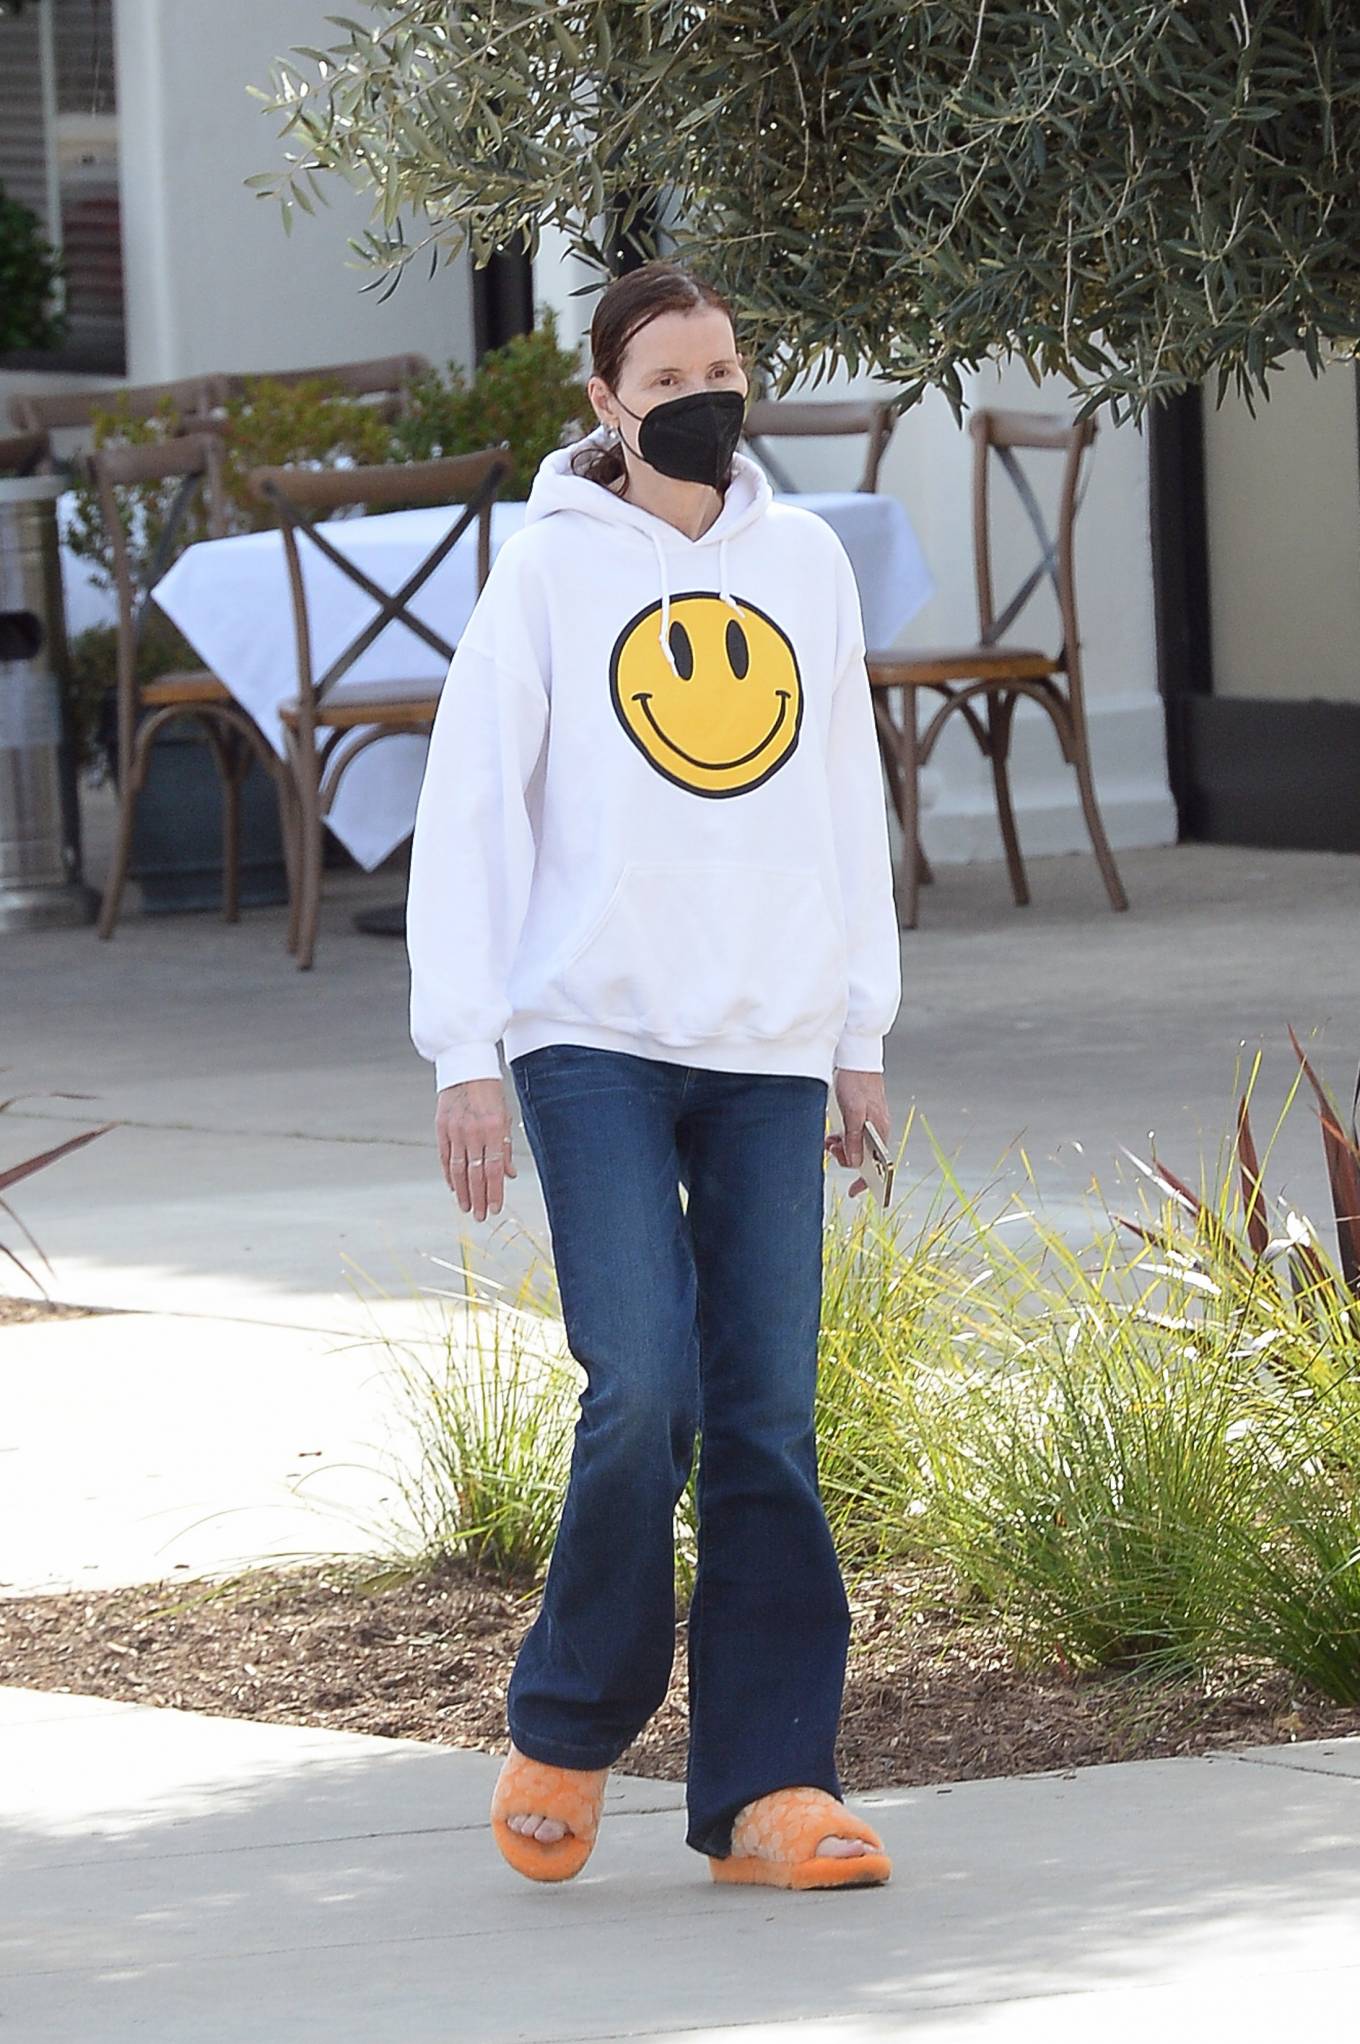 Geena Davis 2022 : Geena Davis – Run errands wearing slippers in Los Angeles-04